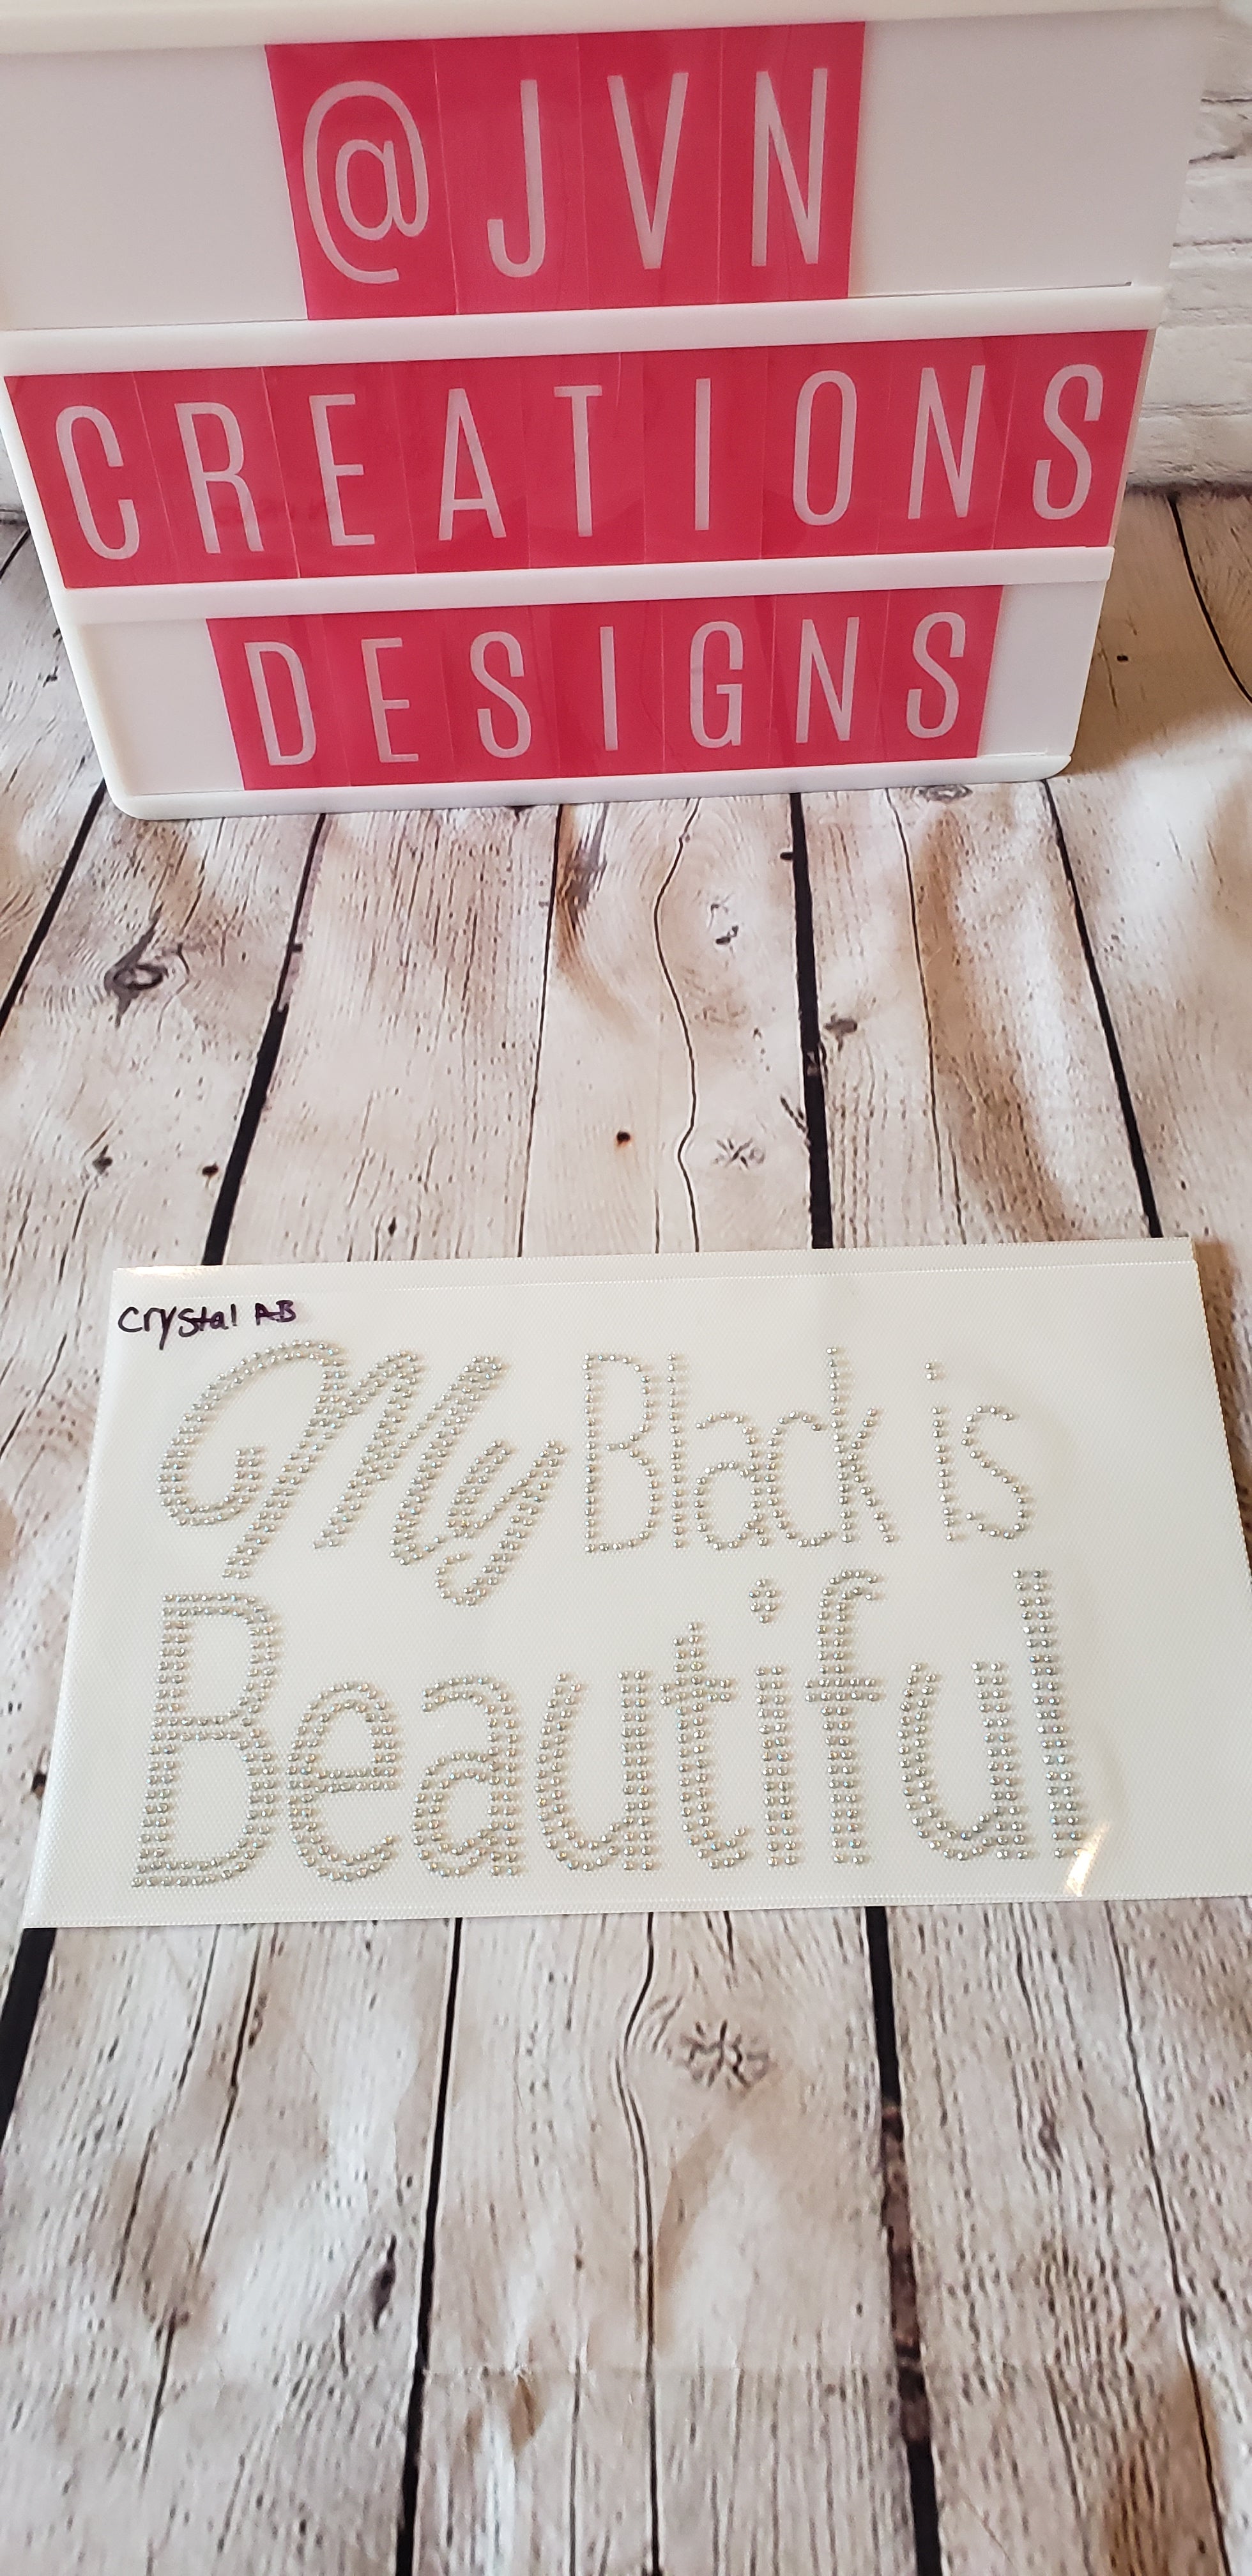 MY BLACK IS BEAUTIFUL RHINESTONE TRANSFER SHEET - JVN Creations & Designs